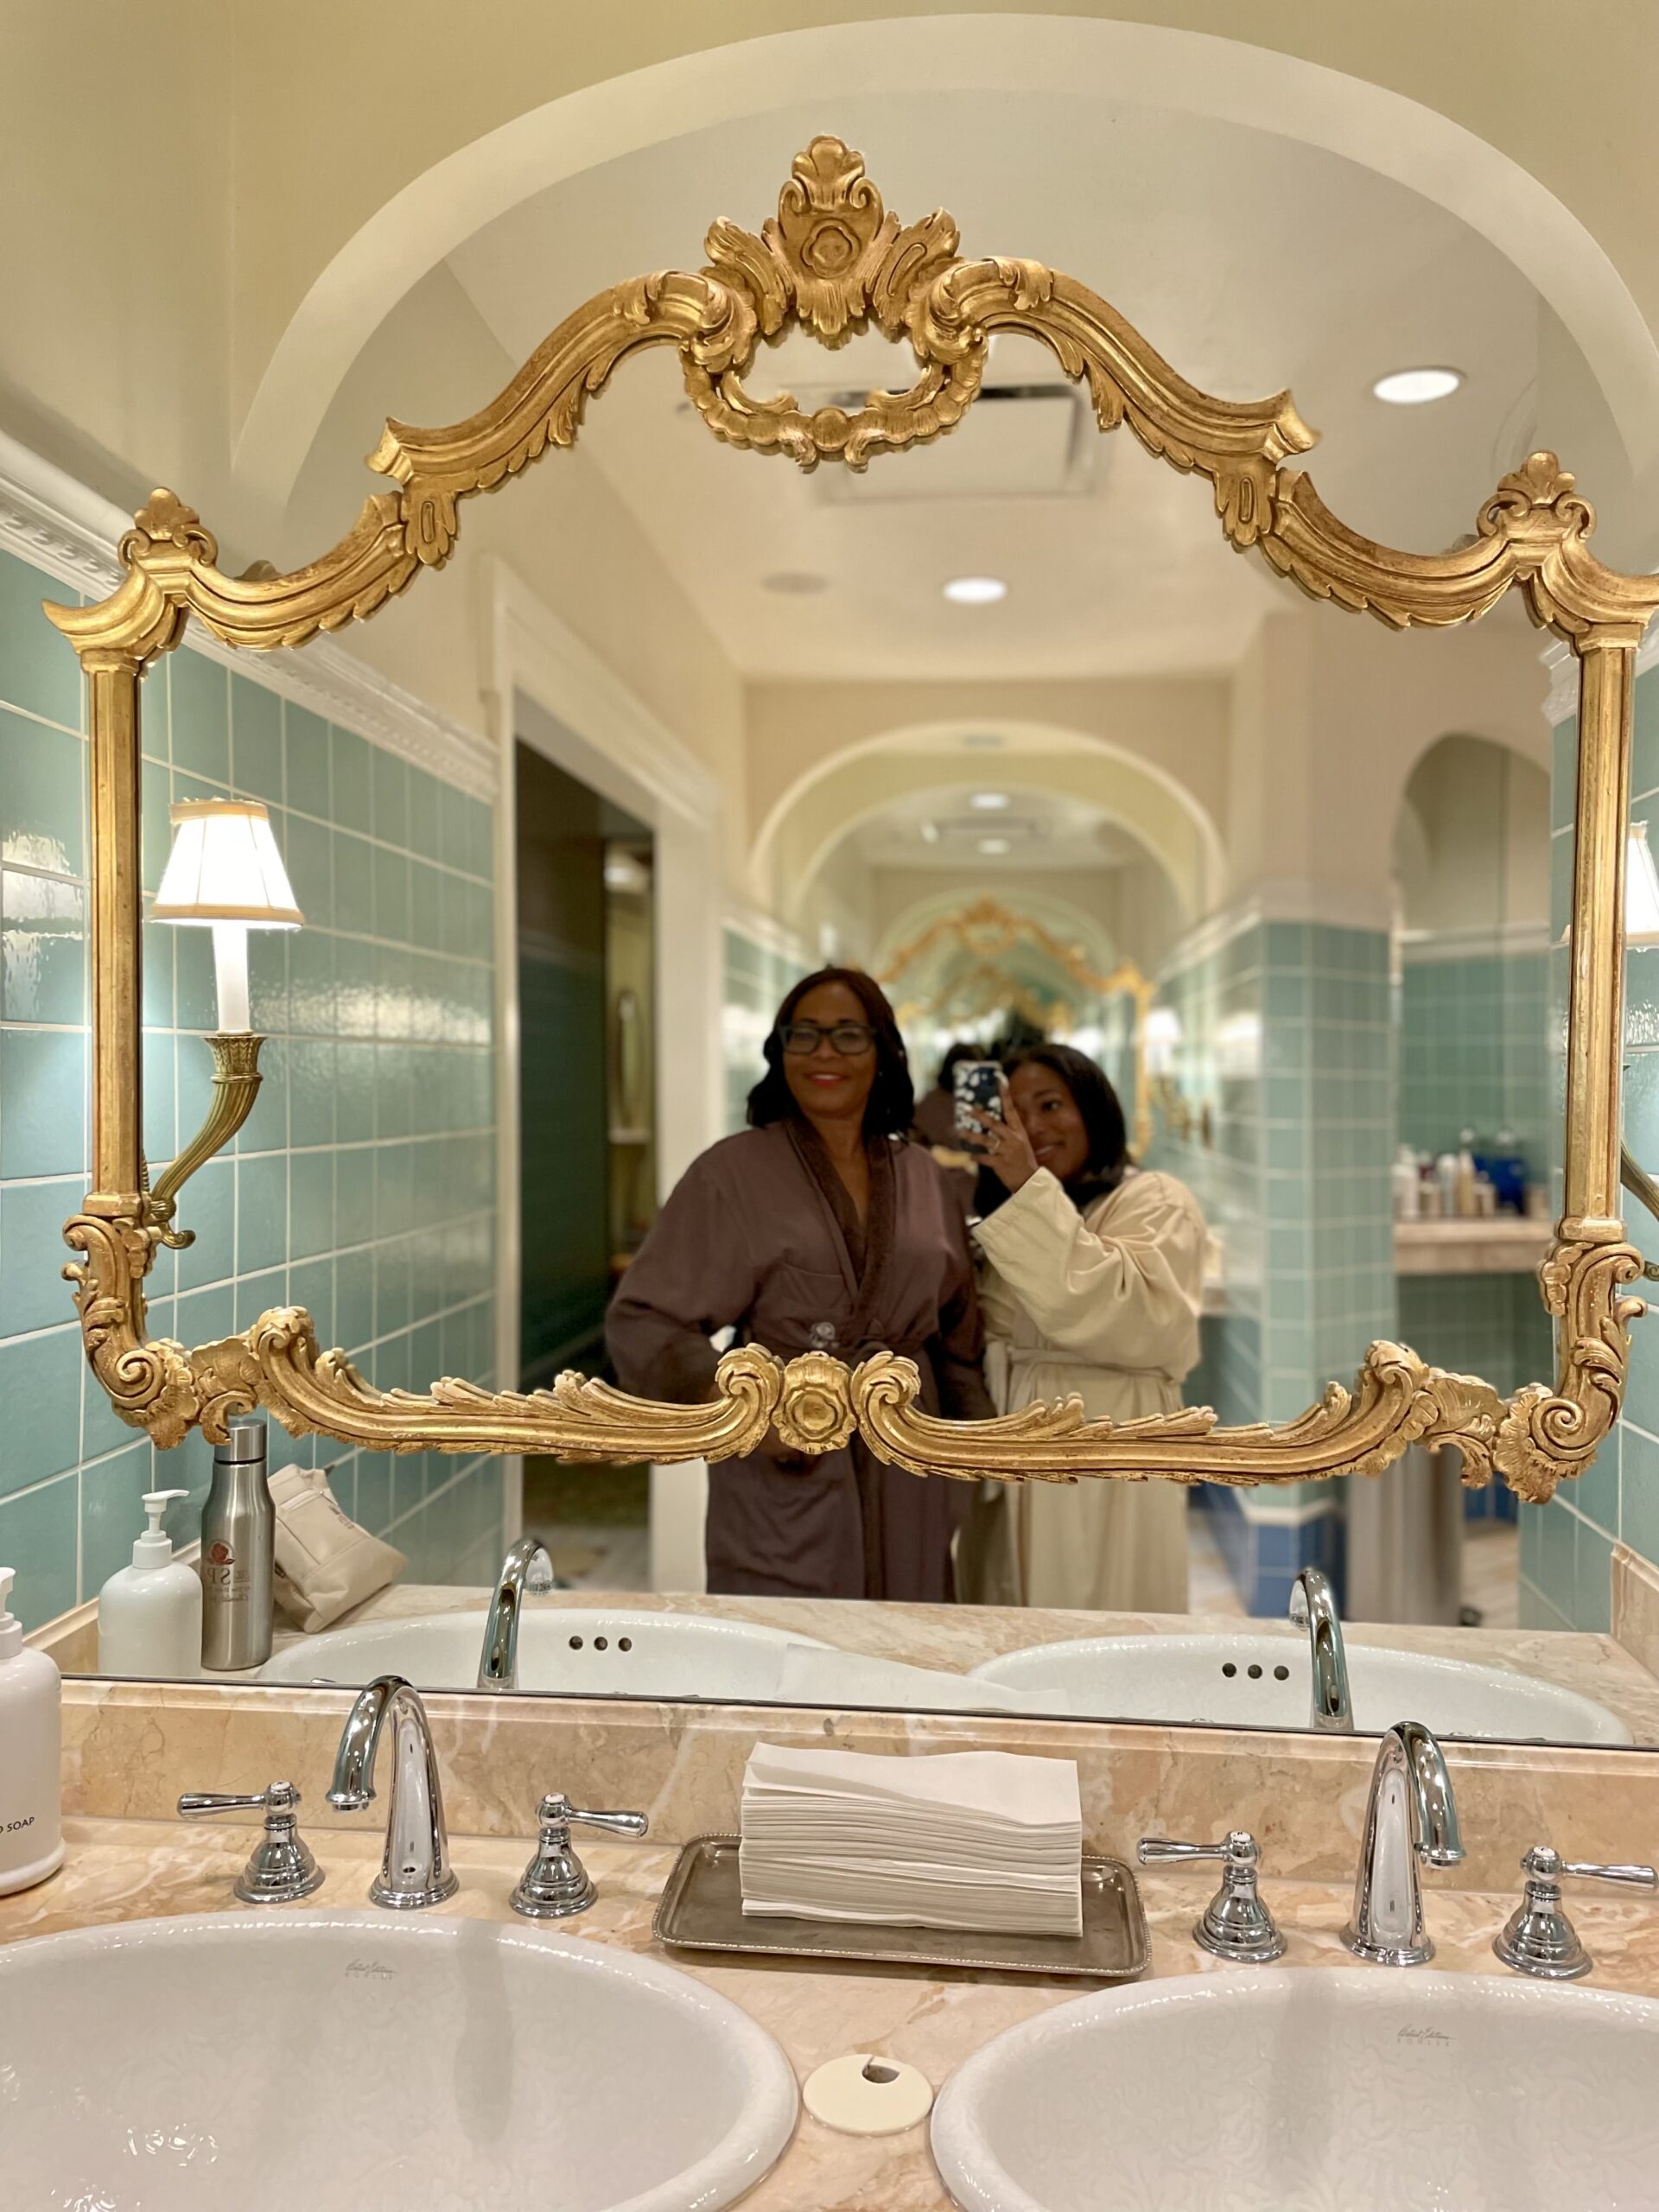 The Spa at the Hotel Hershey Bathroom Mirror Selfie